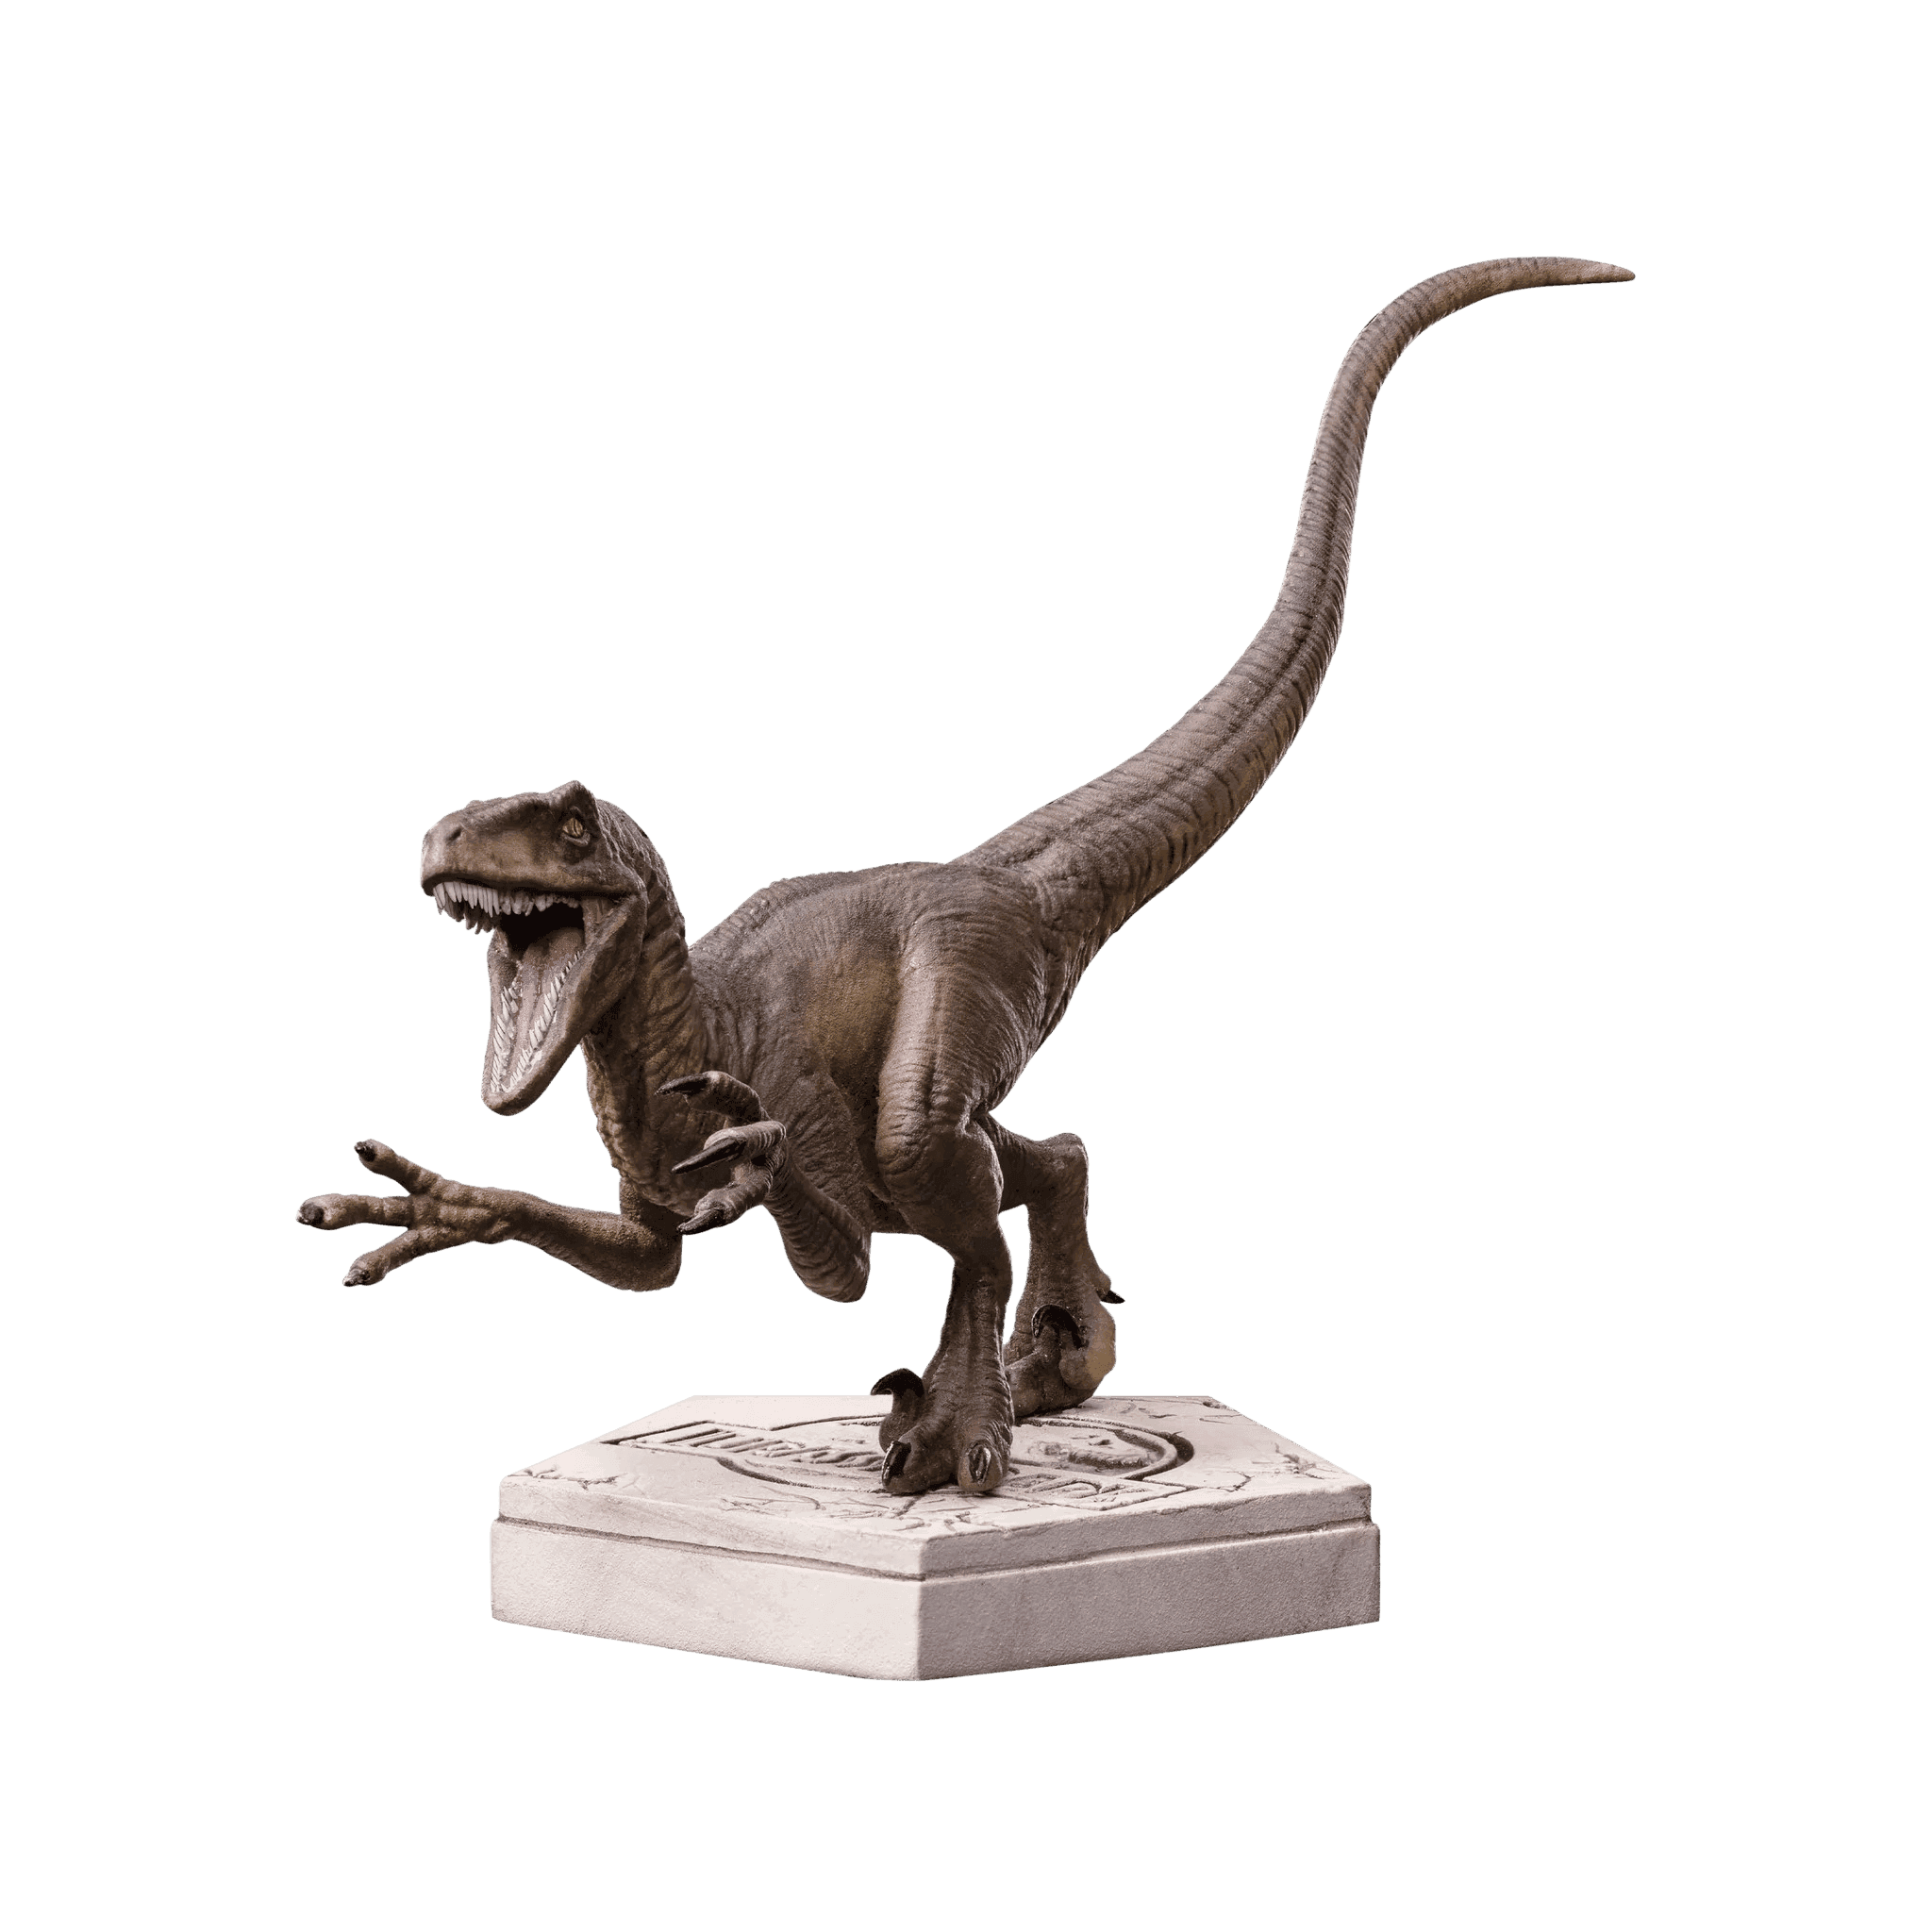 Iron Studios - Jurassic World - Velociraptor A Icons Statue - The Card Vault